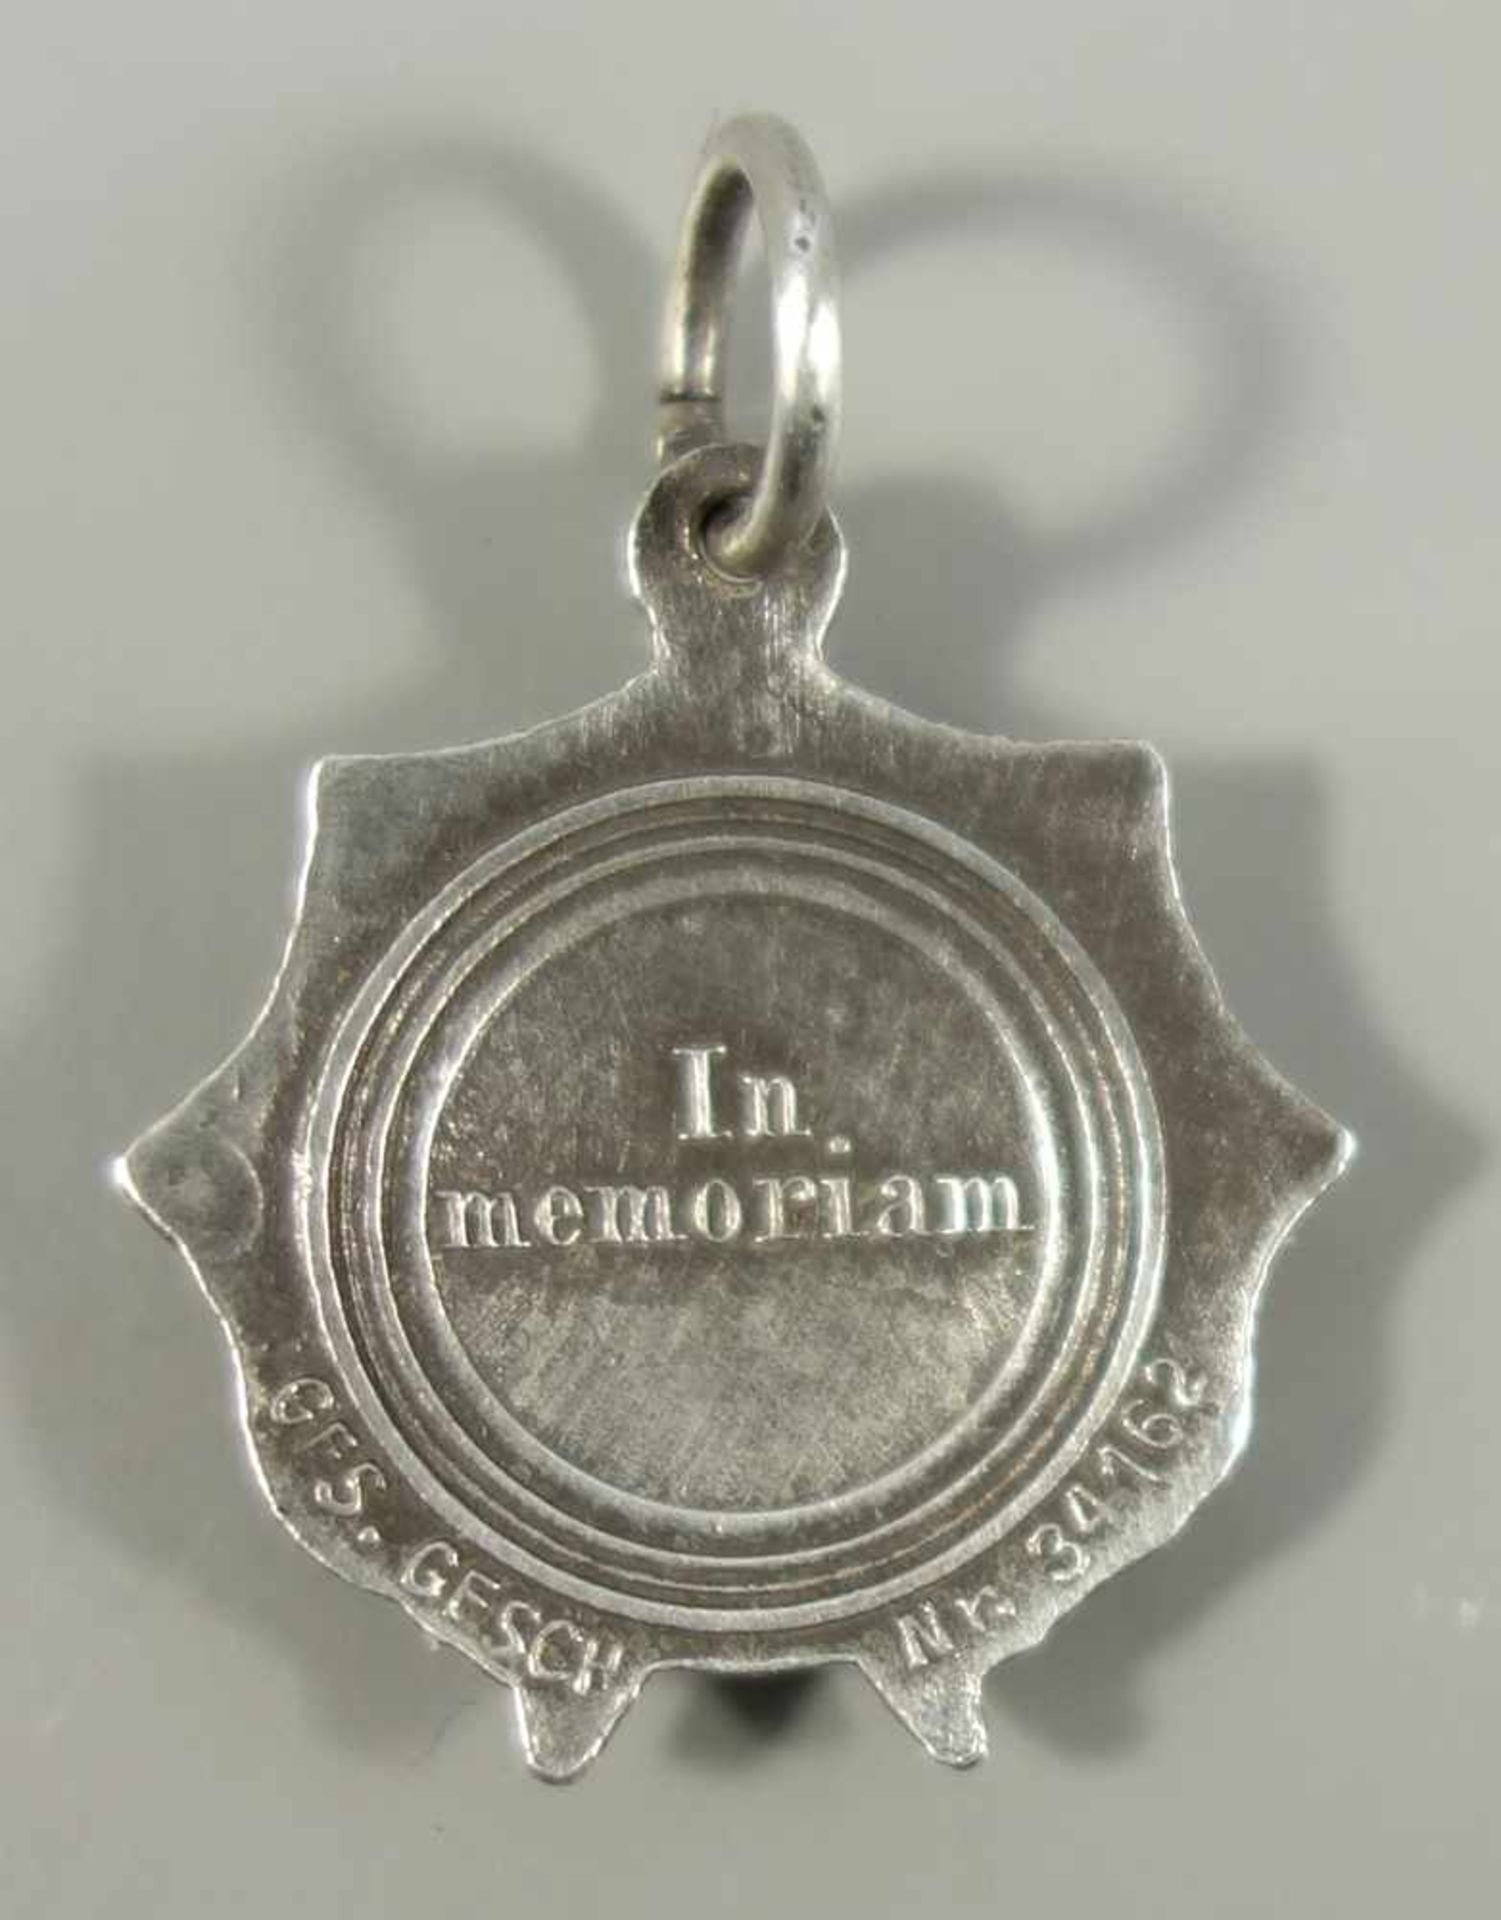 Miniatur Kolonialauszeichnung - Löwenorden in Silber, Buntmetall versilbert, Nr.34162, D.1,8cm - Bild 2 aus 2